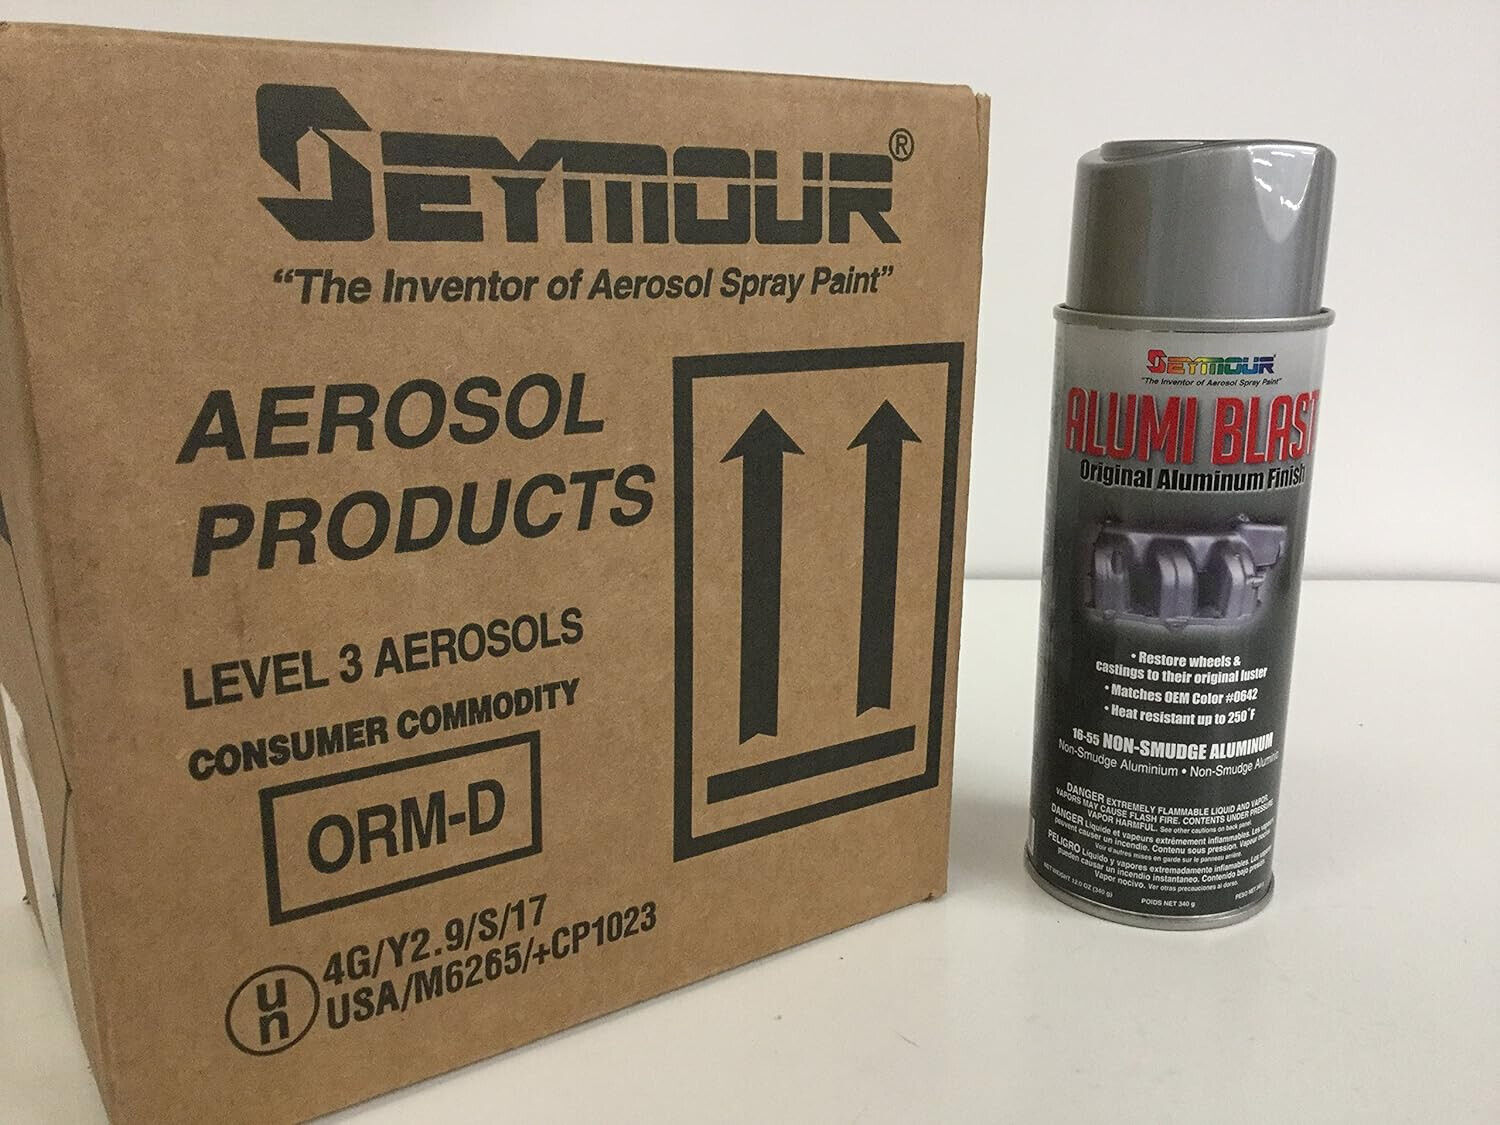 Seymour Alumi Blast Professional Grade Aluminum Paint. Case lot of (6) Cans